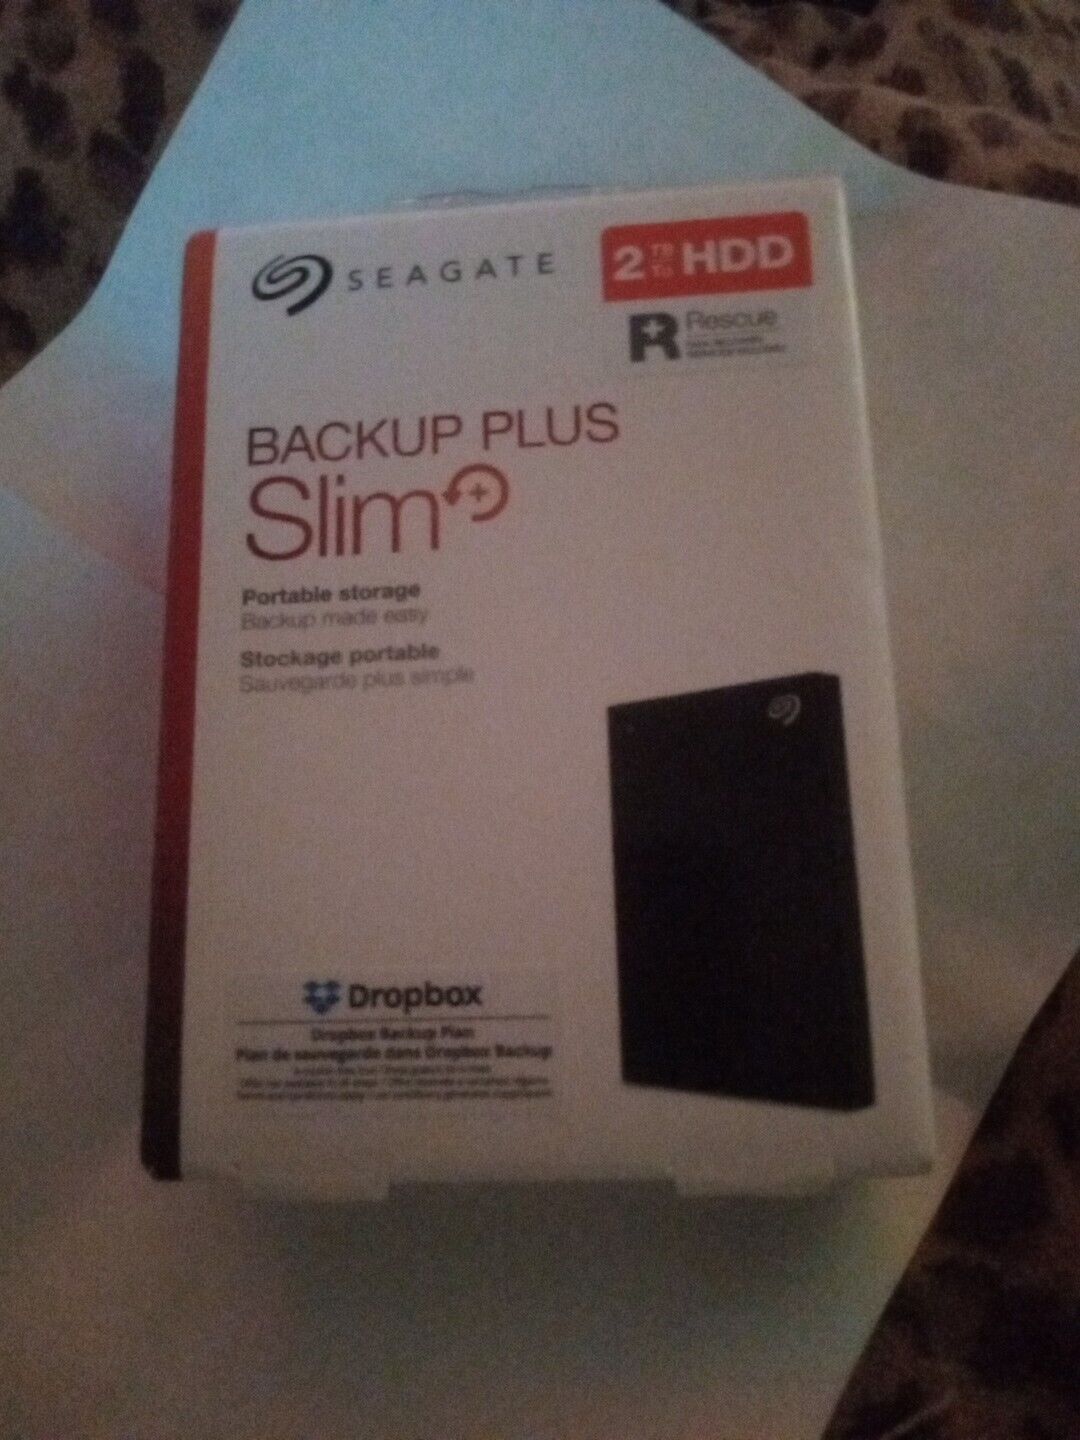 Seagate STHN2000400 Backup Plus Slim USB 3.0 2TB External Hard Drive - Black